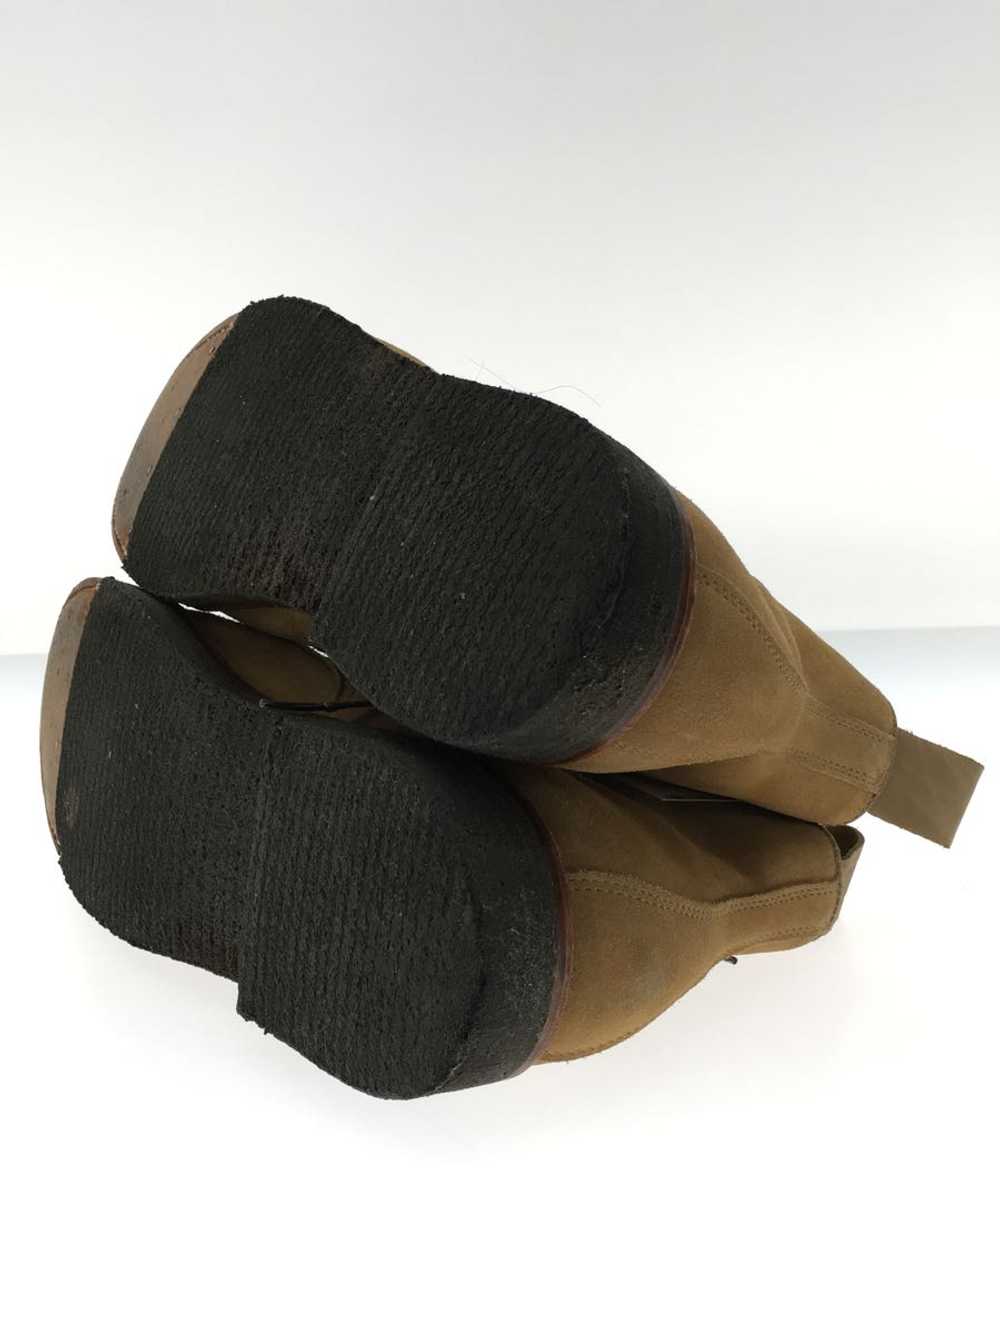 Alden For Leather Soul/Plain Toe Boots/Boots/Uk7.… - image 5